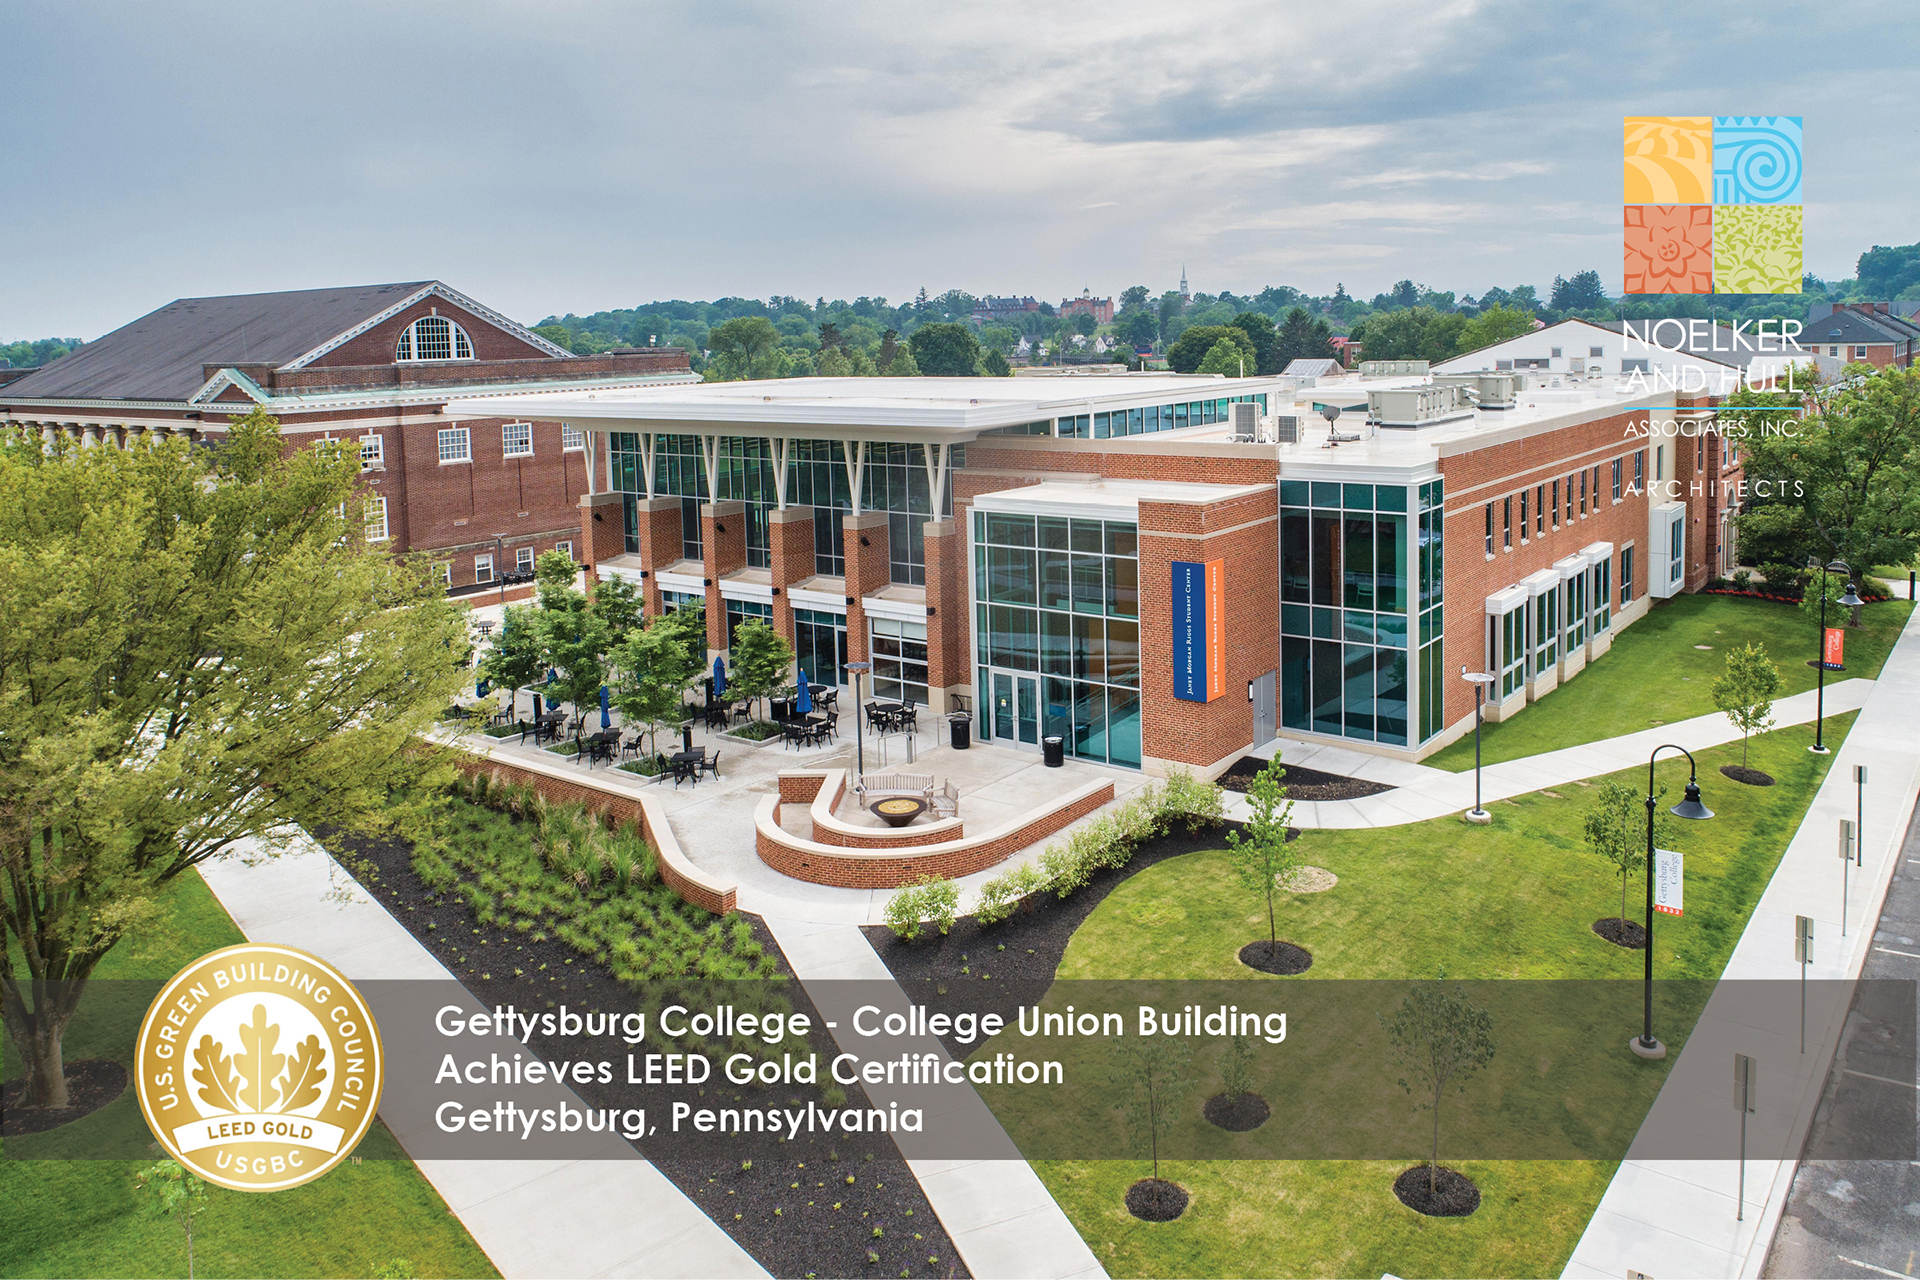 Gettysburg College - College Union Building